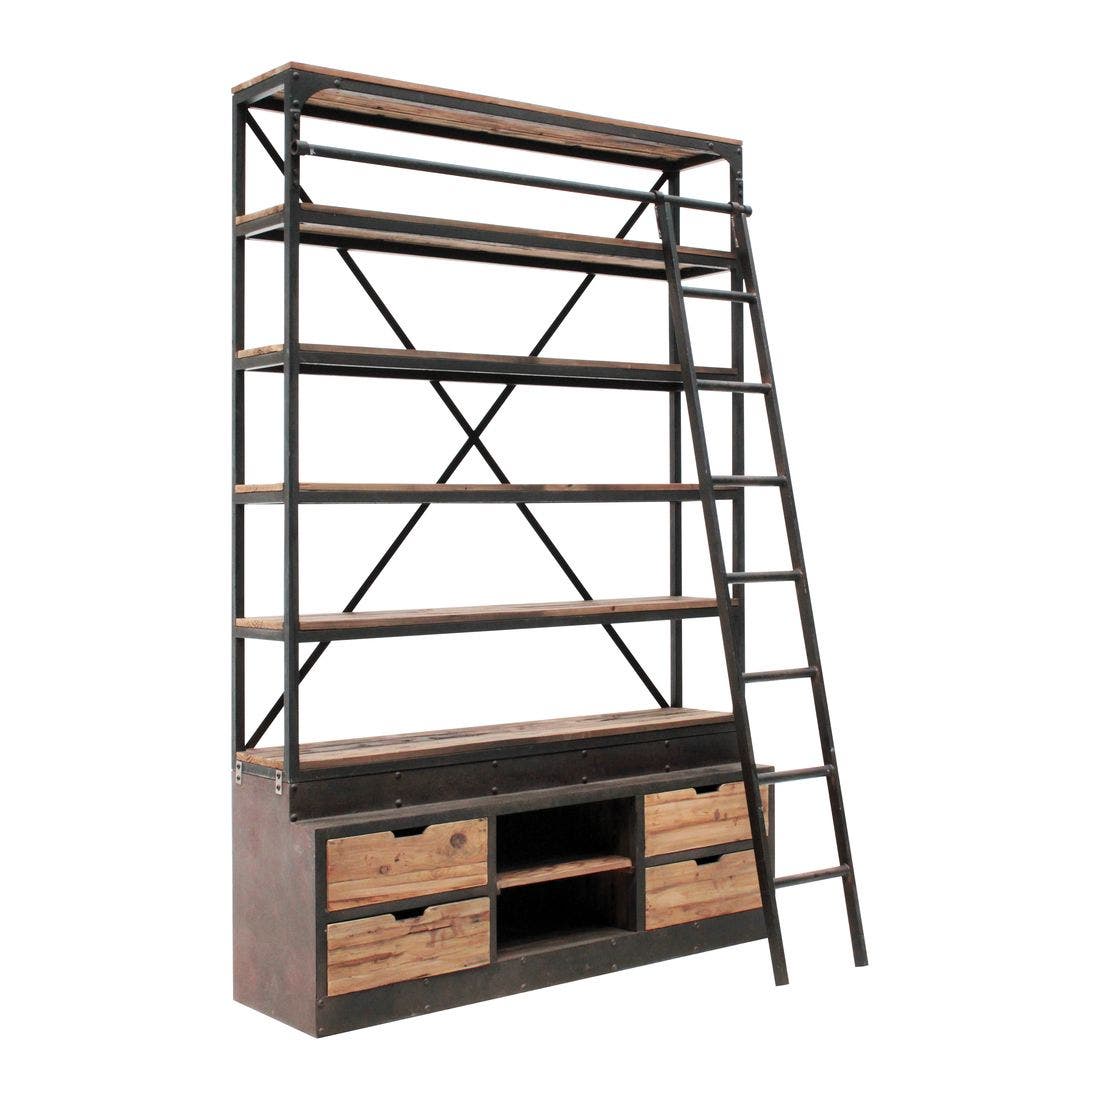 19089166-earra-furniture-storage-organization-book-storage-02